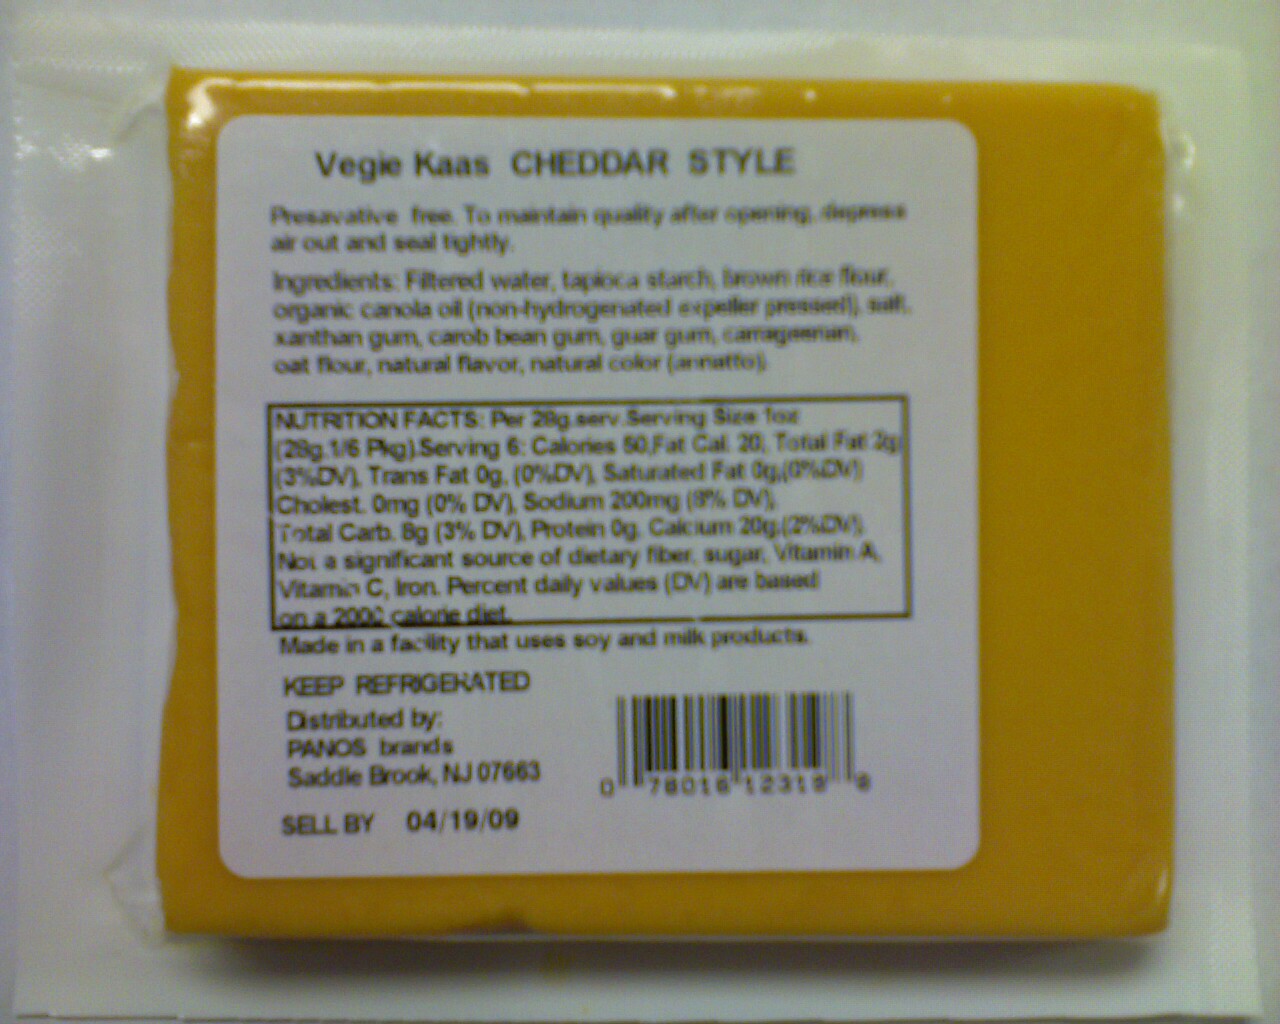 label from Back Label of Vegan Rella Cheddar Block